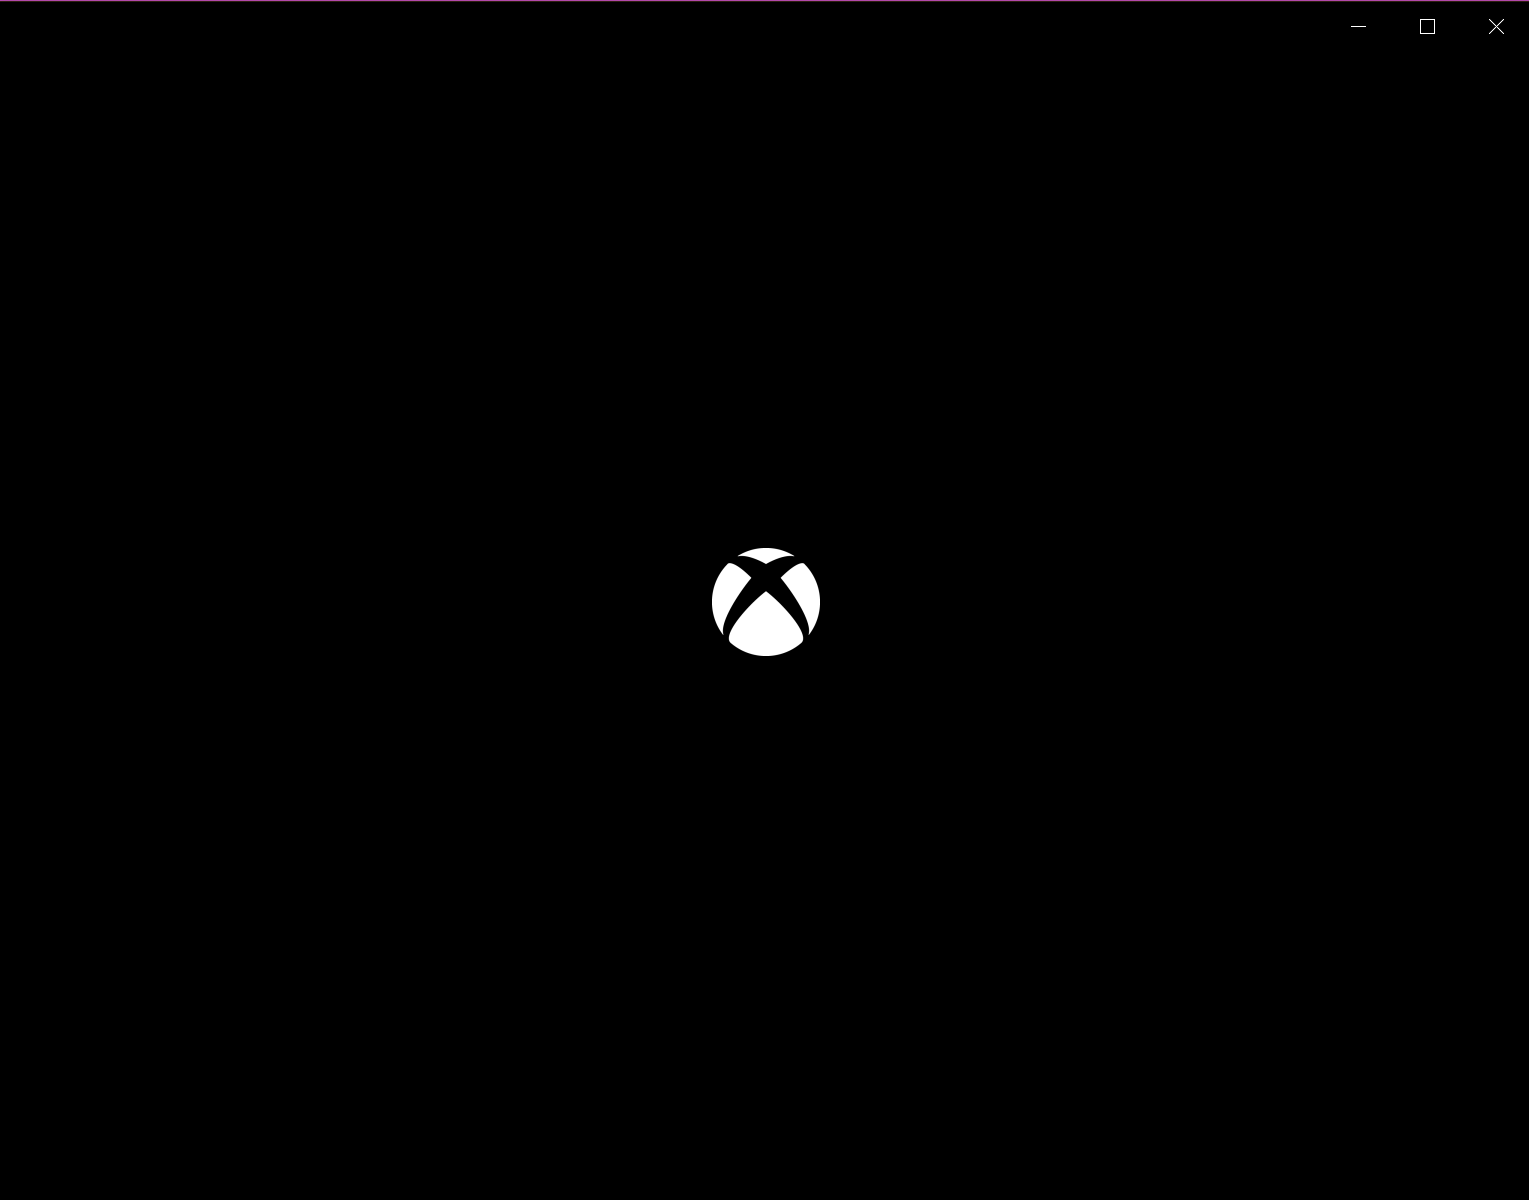 Xbox Windows 10 app instant crashing on launch d5a087d4-a6d1-47e9-a8b1-31d75cdfcd03?upload=true.png